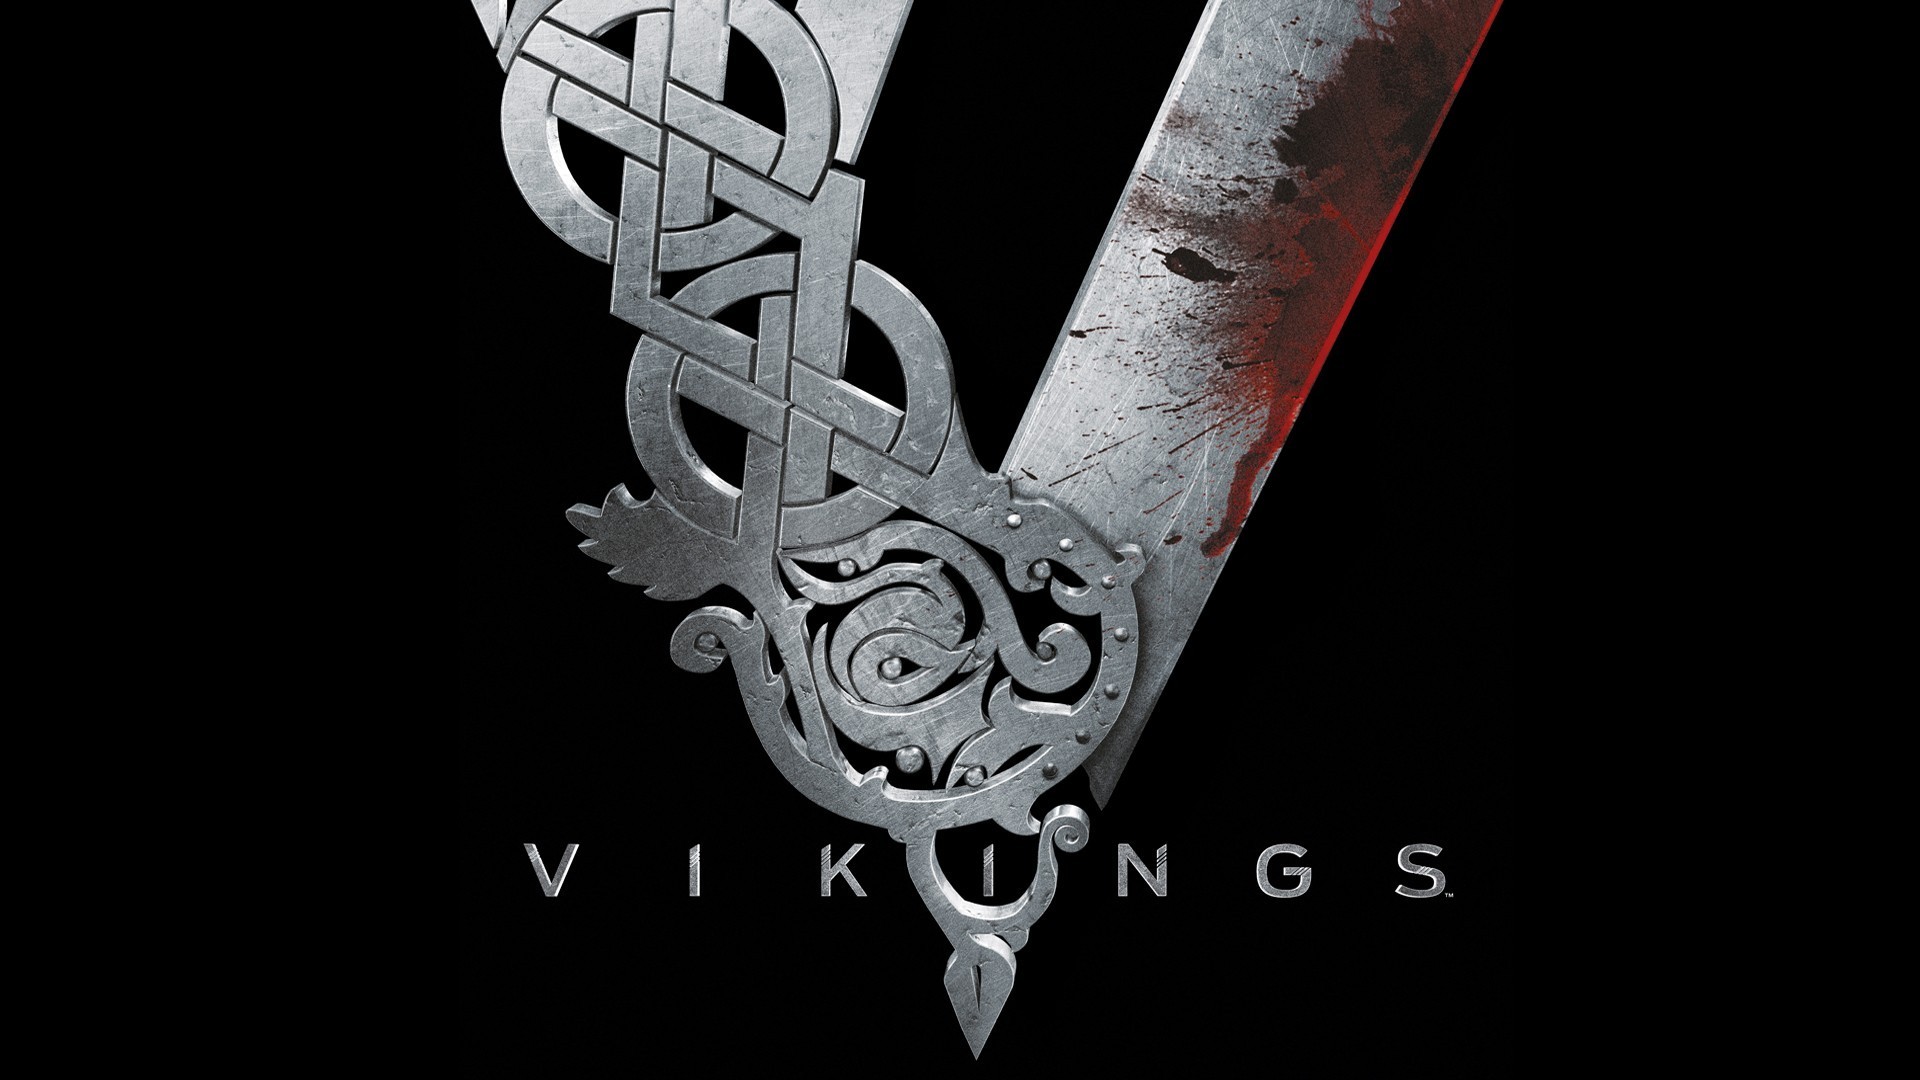 TV Show Vikings HD Wallpaper